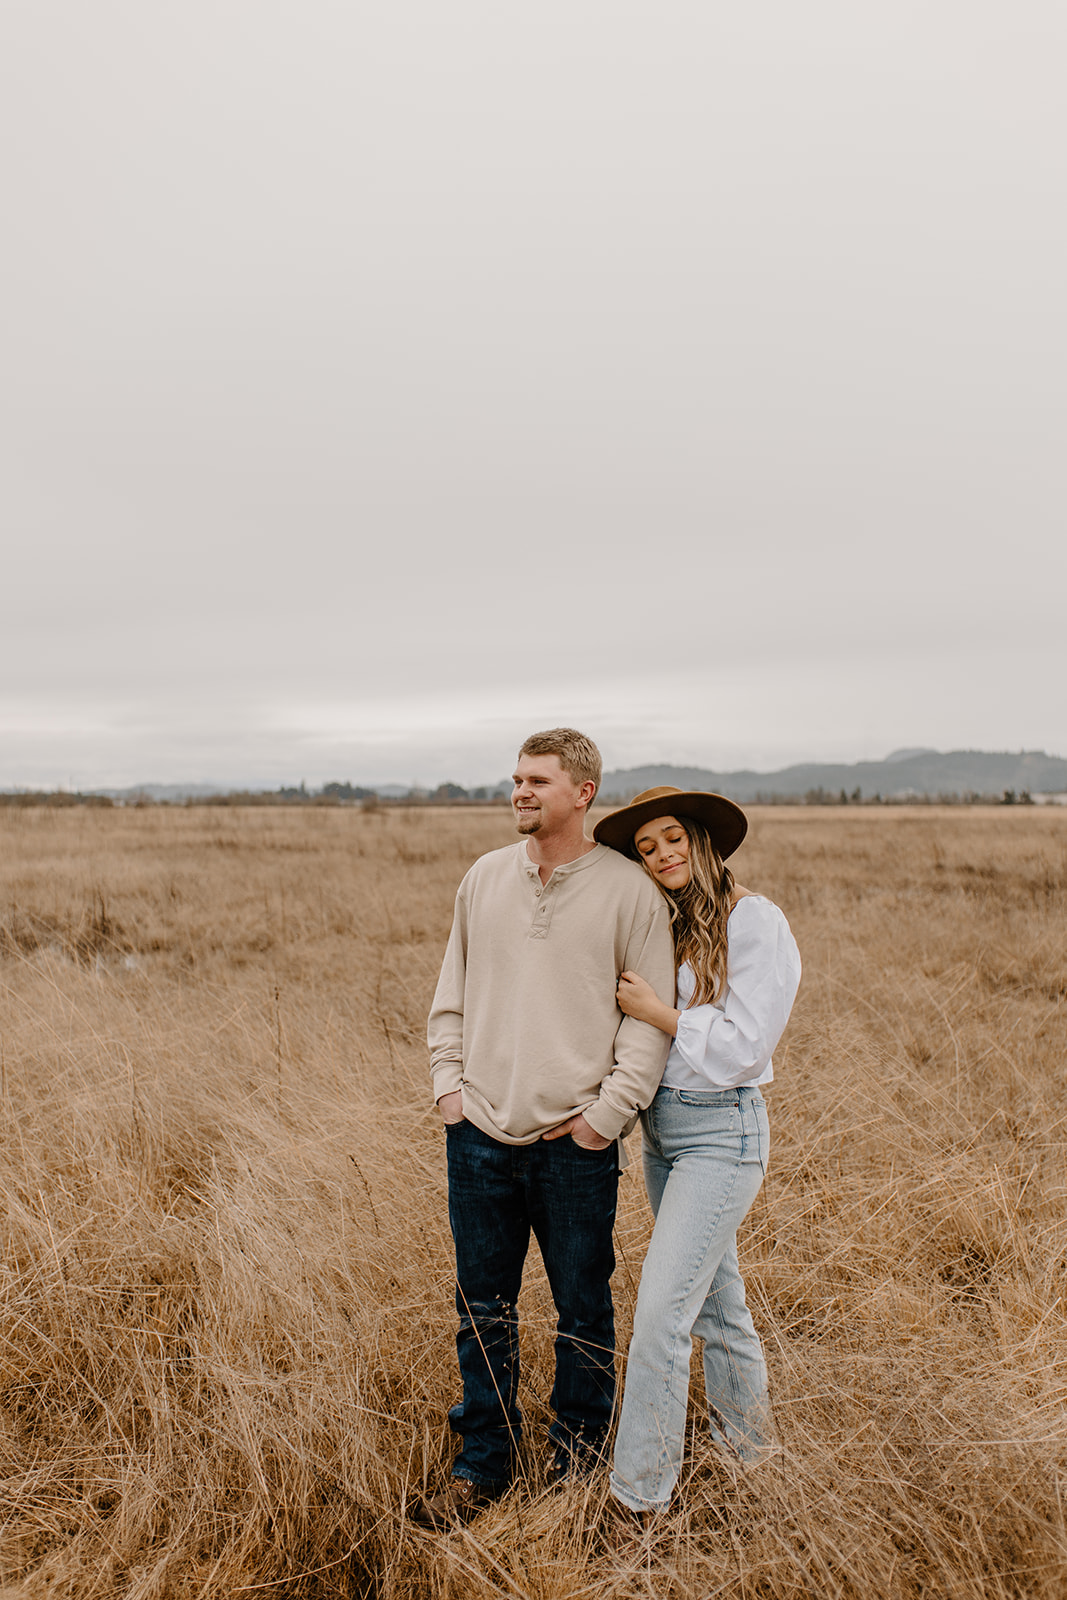 Engagement photos in a golden field